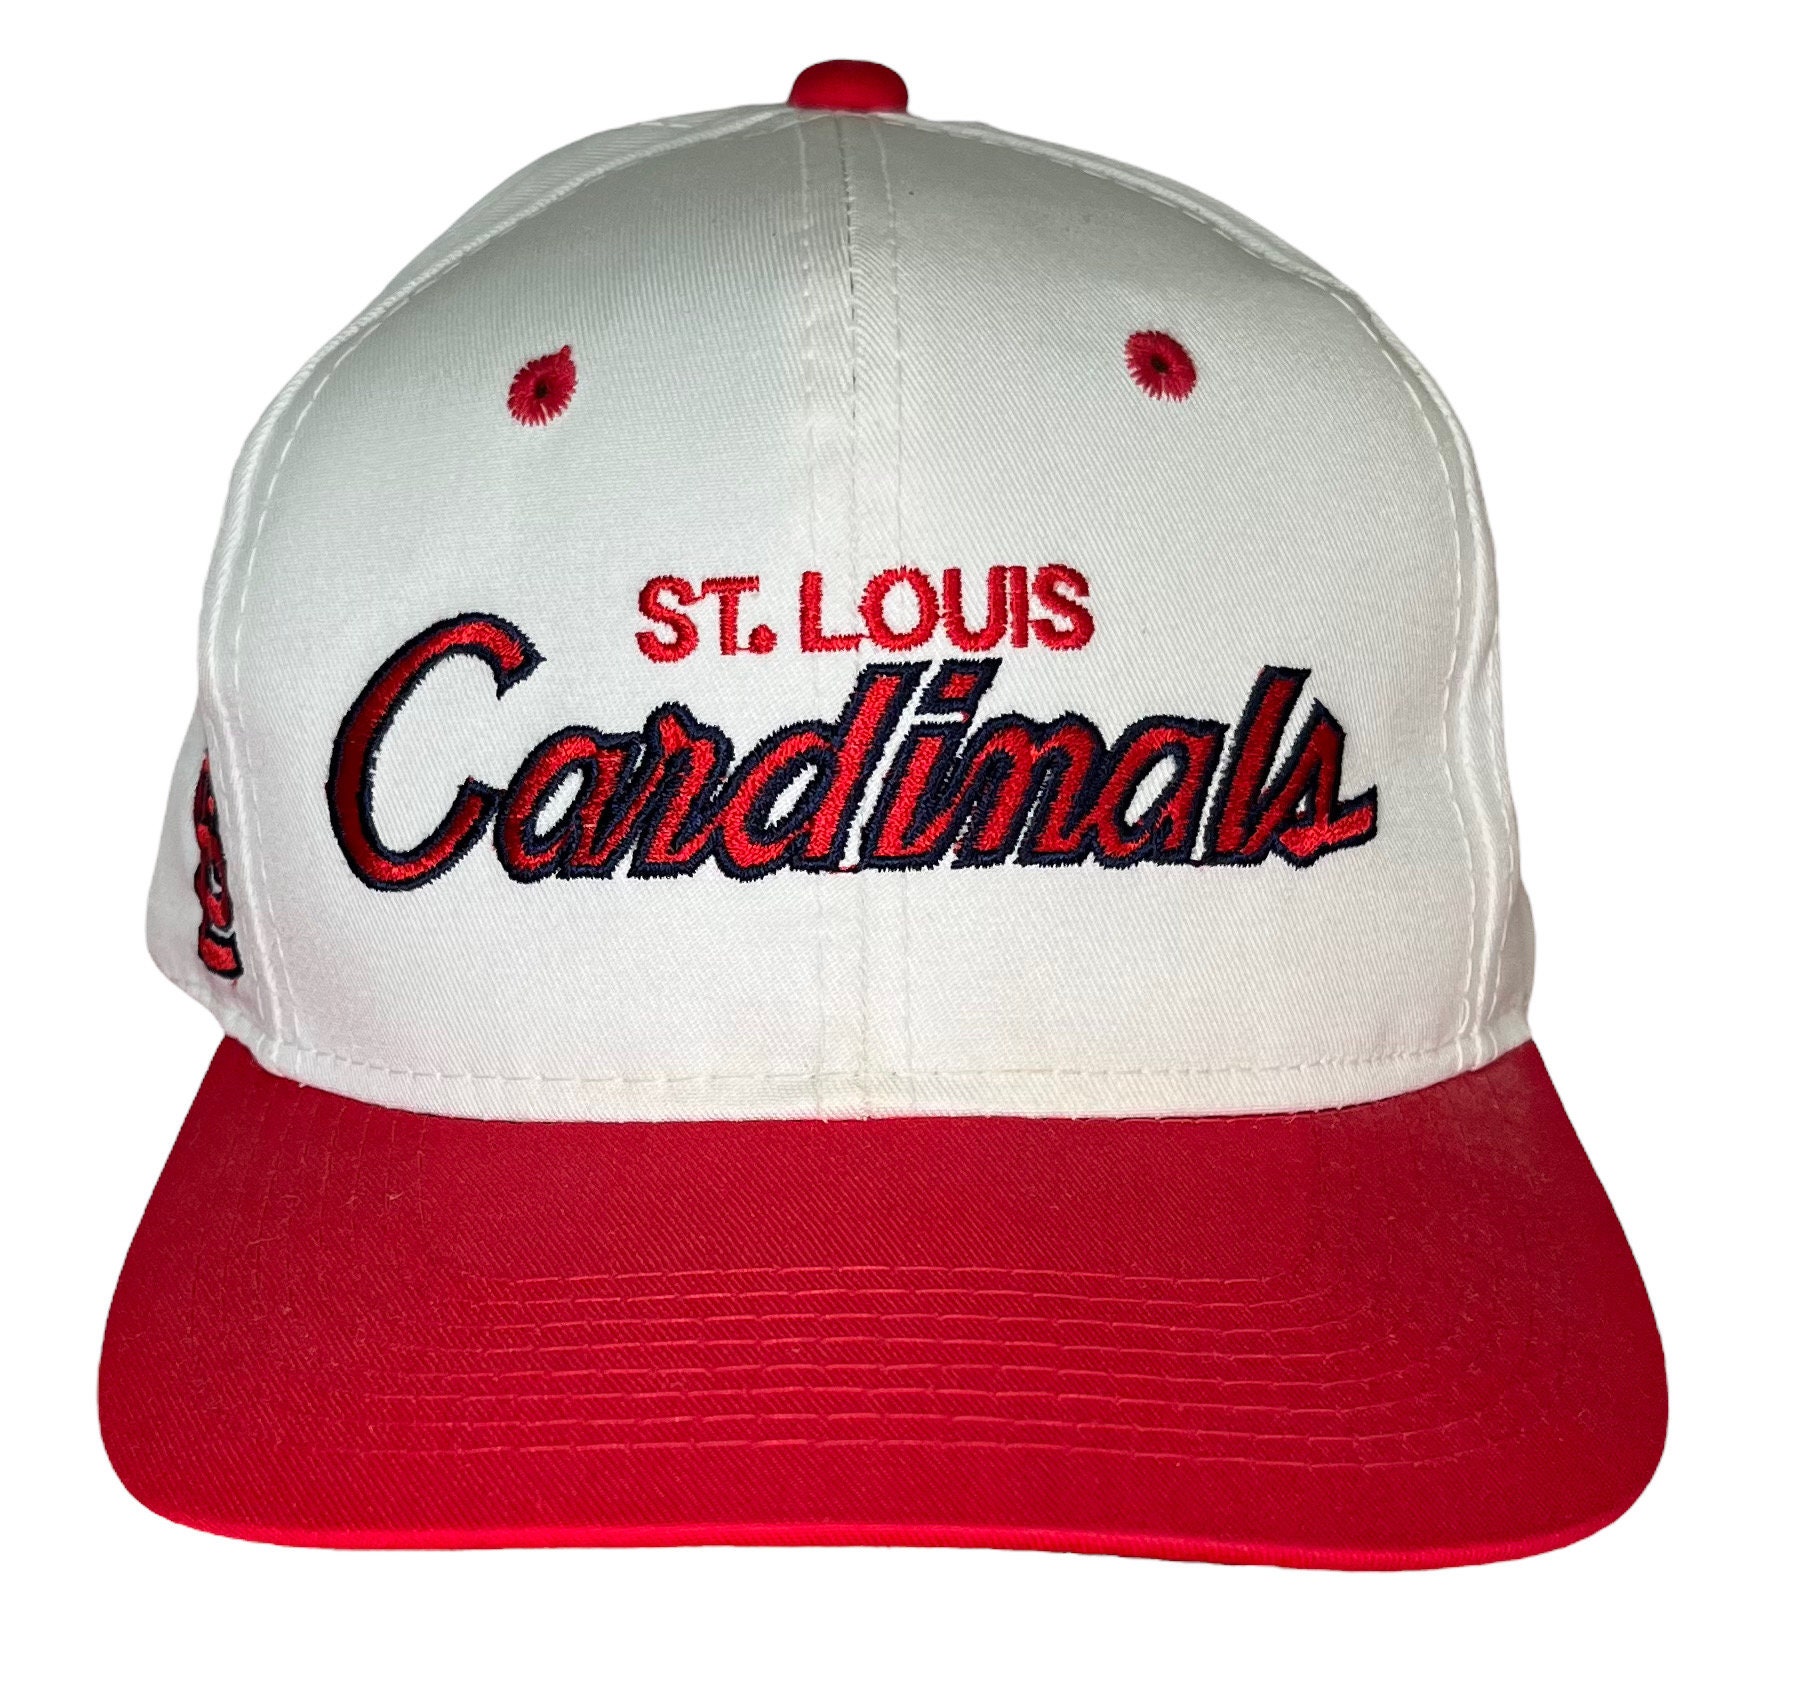 St. Louis Cardinals Golf Bag, Cardinals Head Covers, Sports